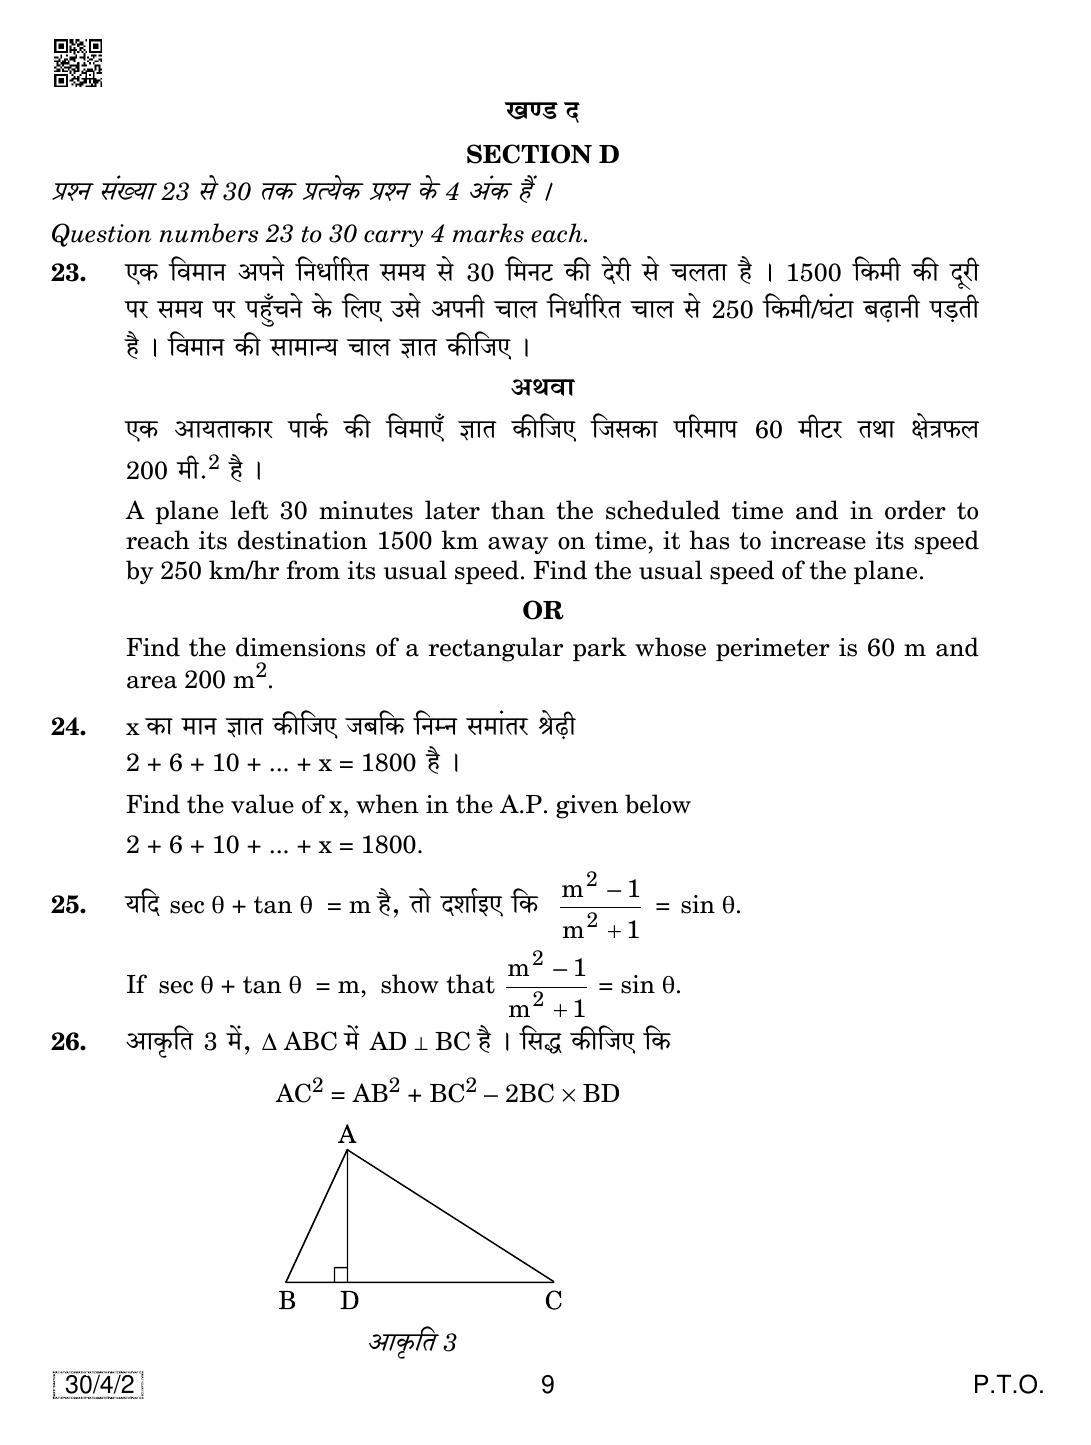 CBSE Class 10 Maths (30/4/2 - SET 2) 2019 Question Paper - Page 9